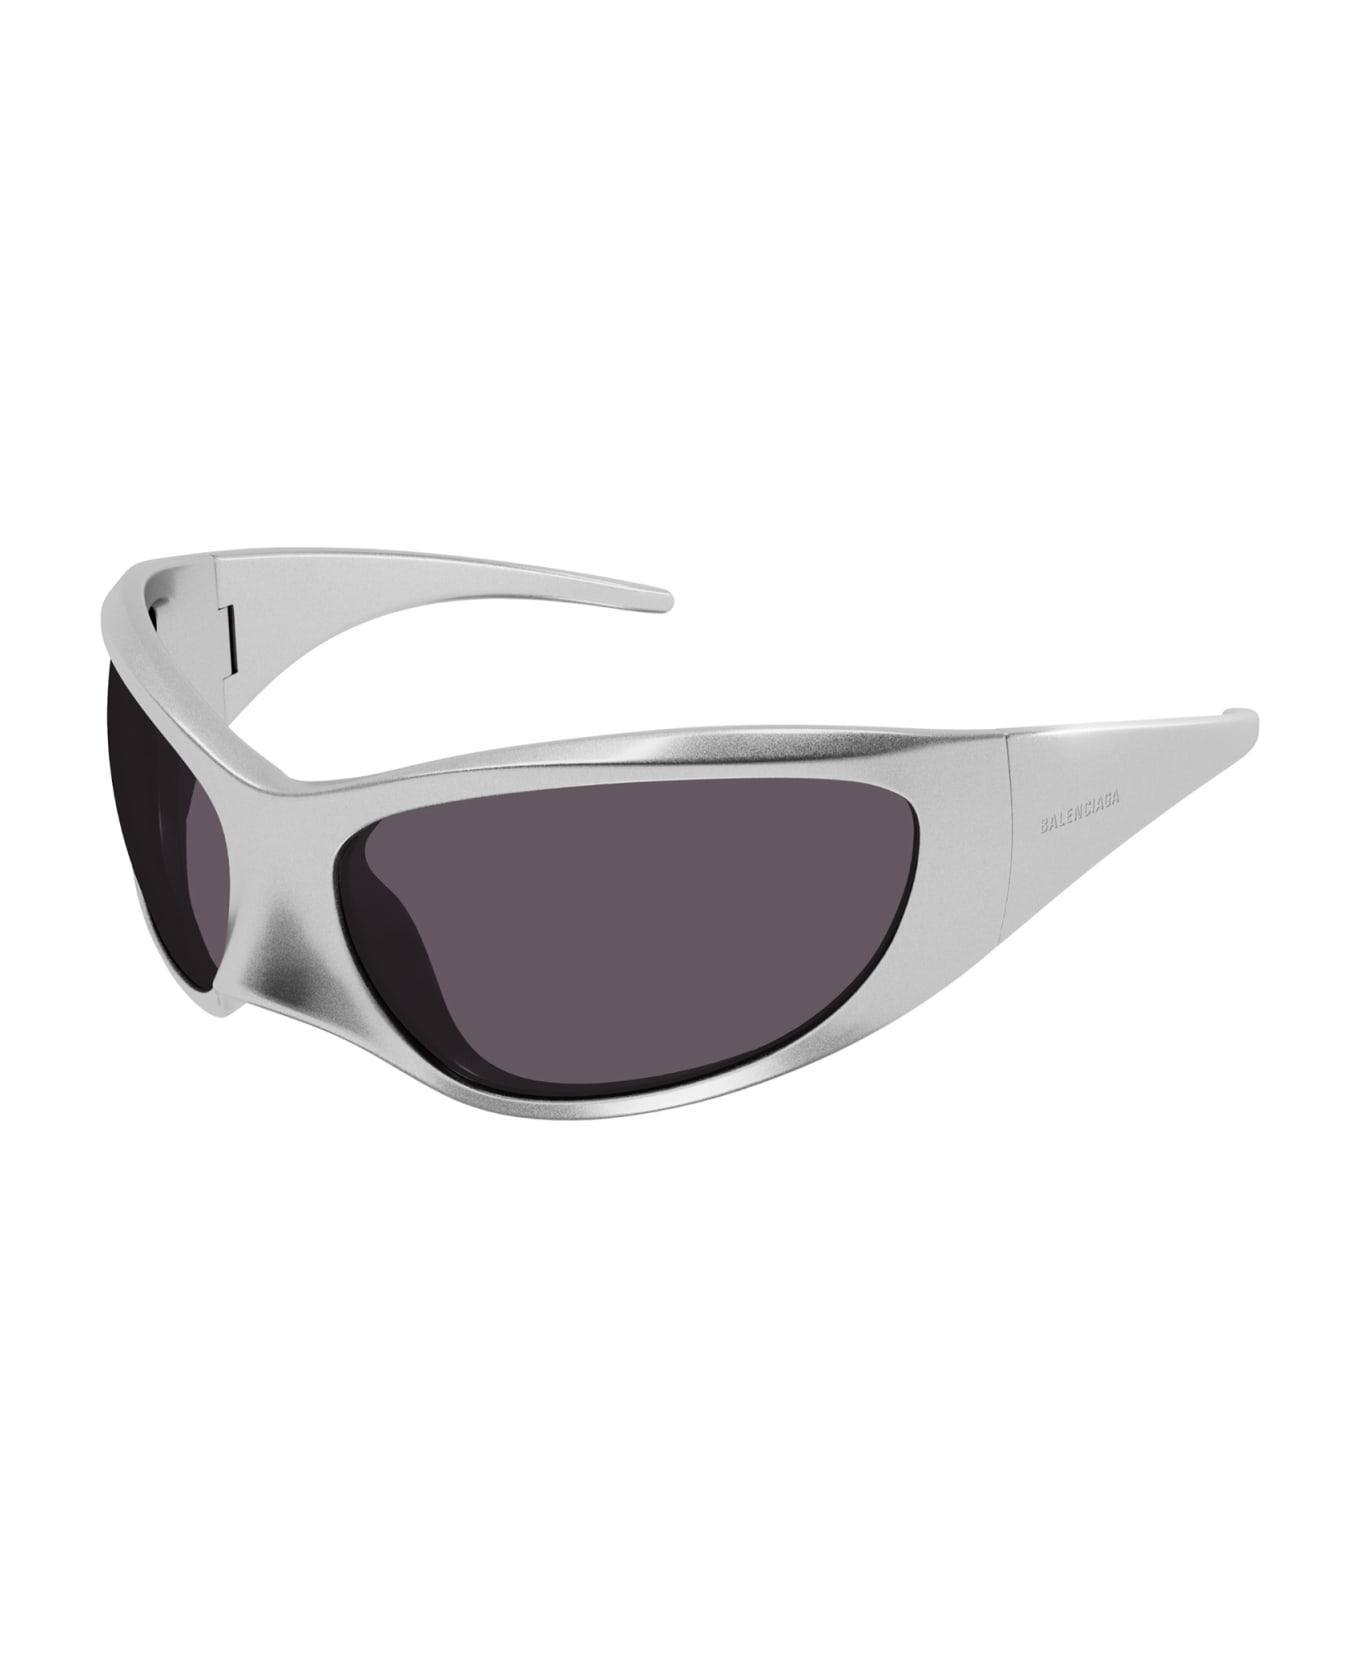 Balenciaga Eyewear Bb0252s Sunglasses - 005 SILVER SILVER GREY